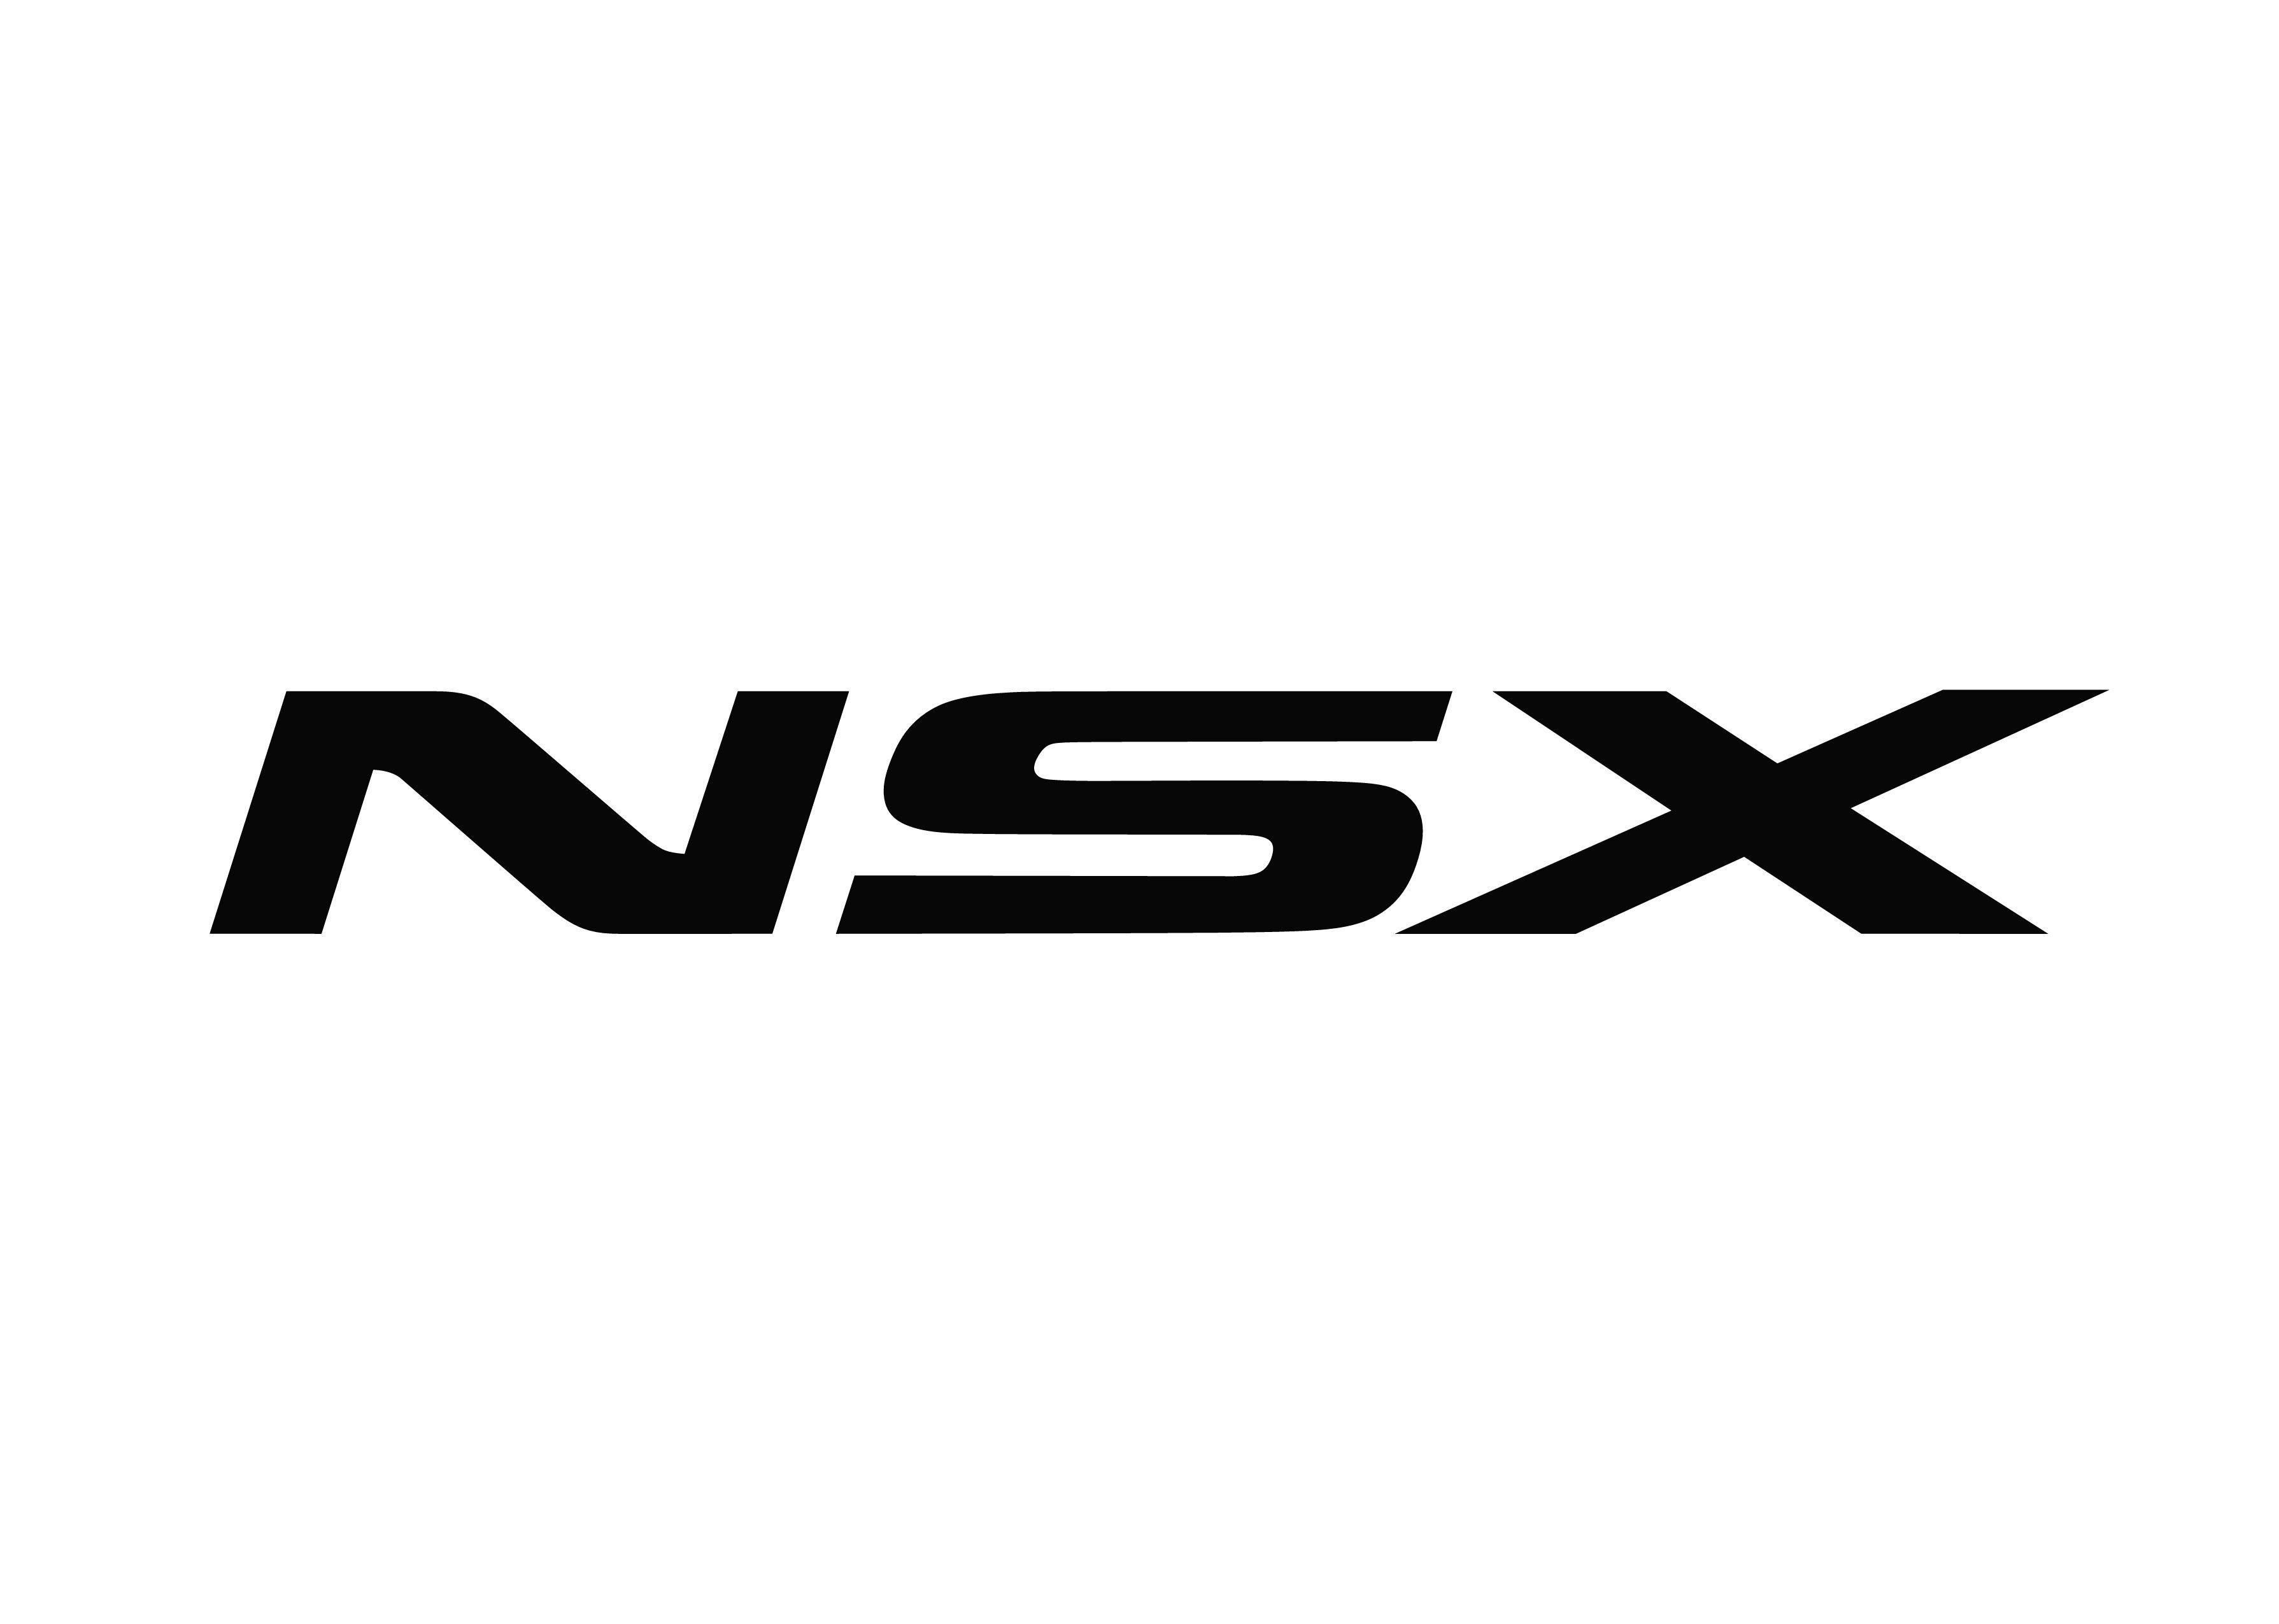 NSX Logo - Wallpaper : logo, brand, acura, nsx, netcarshow, netcar, car images ...